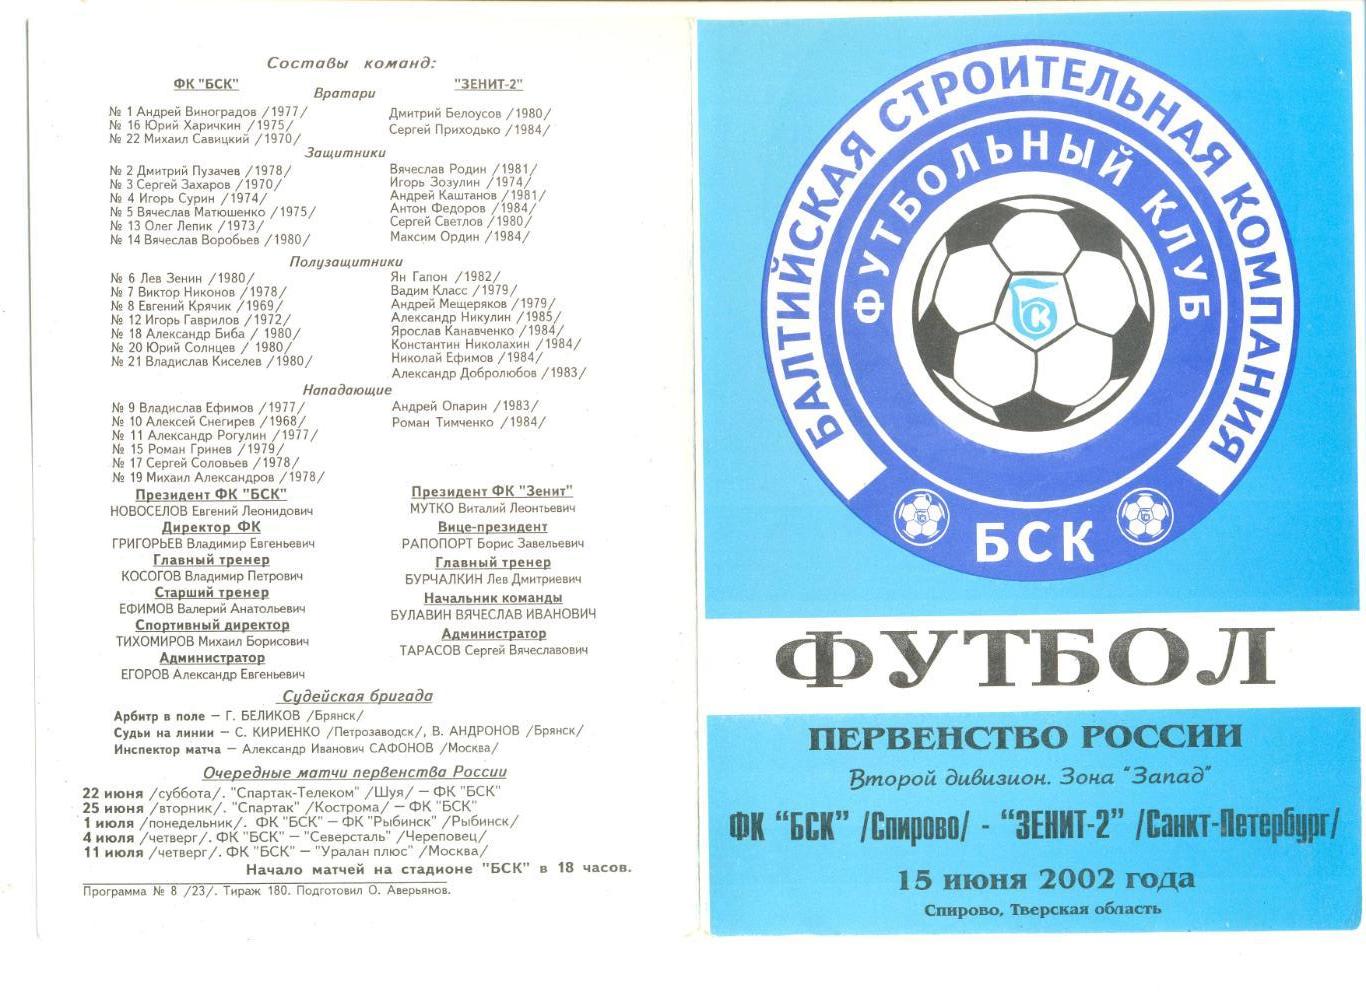 БСК Спирово - Зенит-2 Санкт-Петербург 15.06.2002 г. Тираж 180 шт.